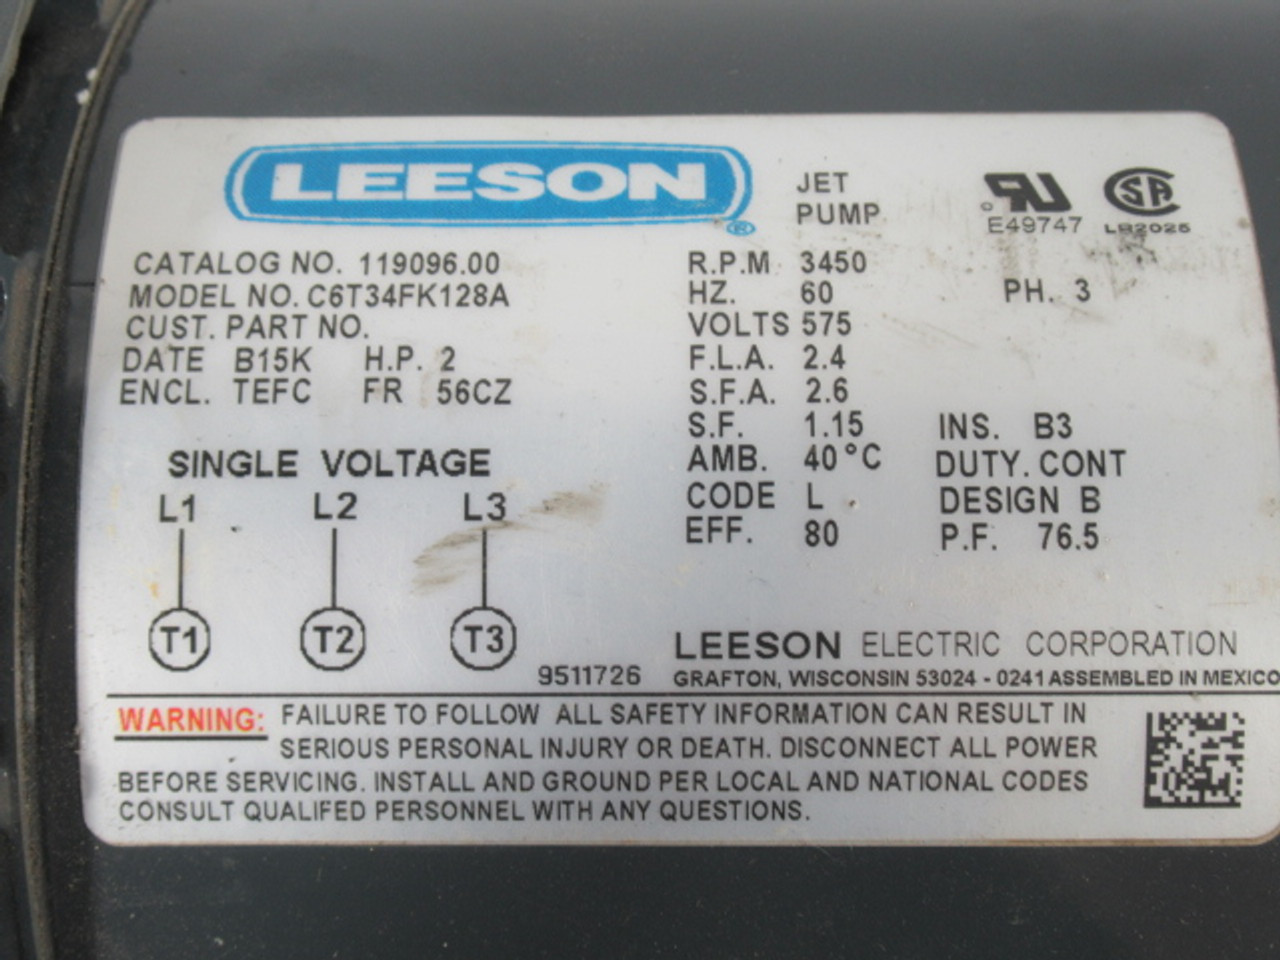 Leeson 2HP 3450RPM 575V 56CZ TEFC 3PH 2.4A 60Hz USED